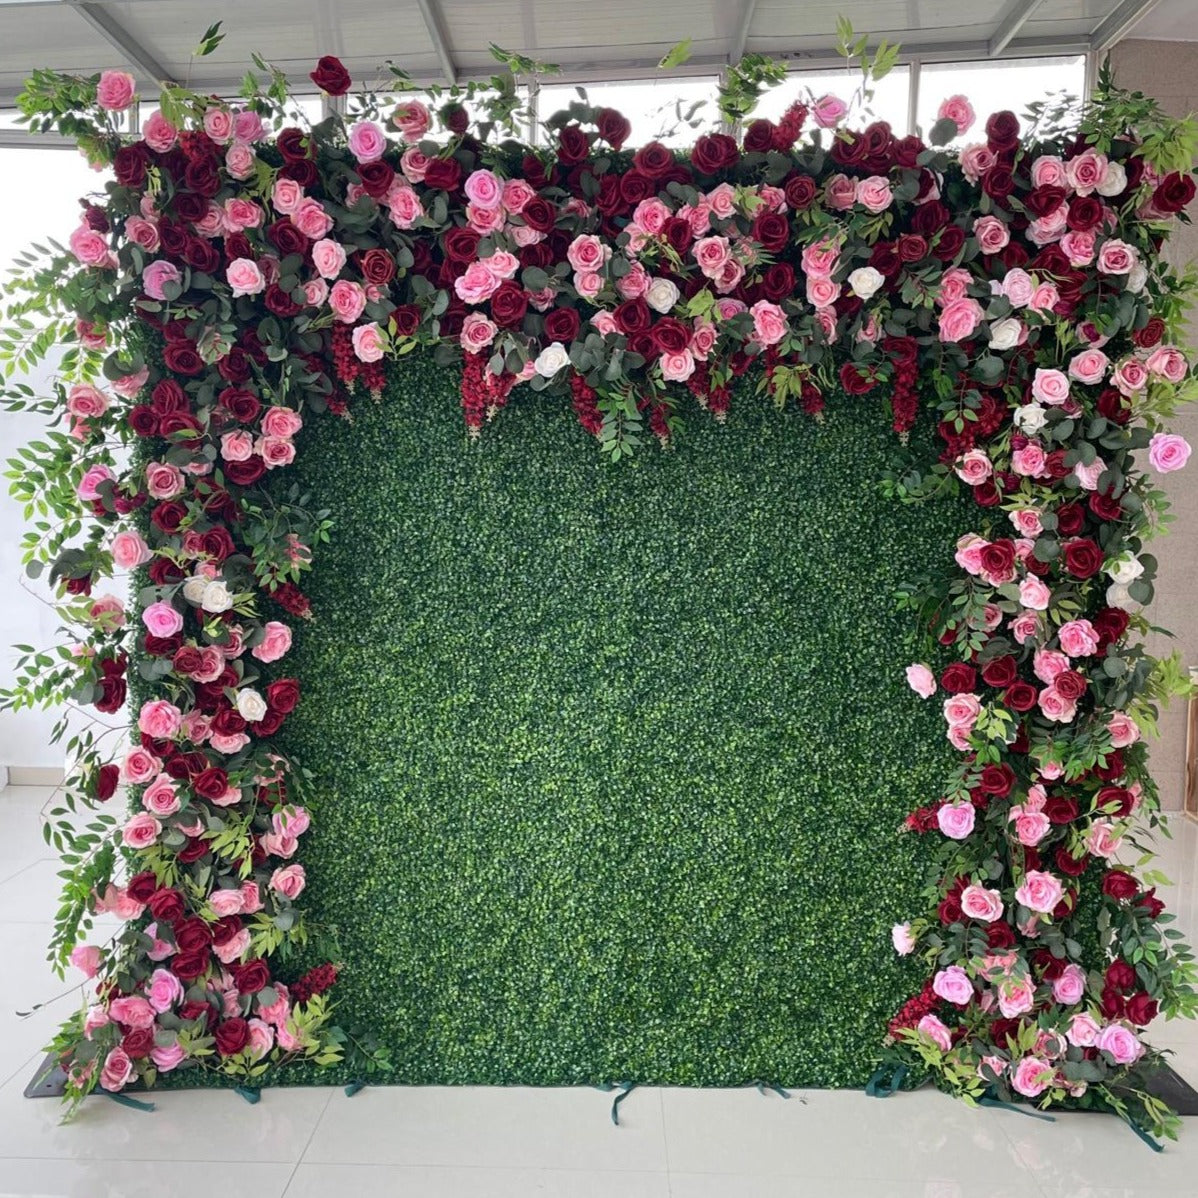 3D Artificial Flower Wall Arrangement Wedding Party Birthday Backdrop Decor HQ3990